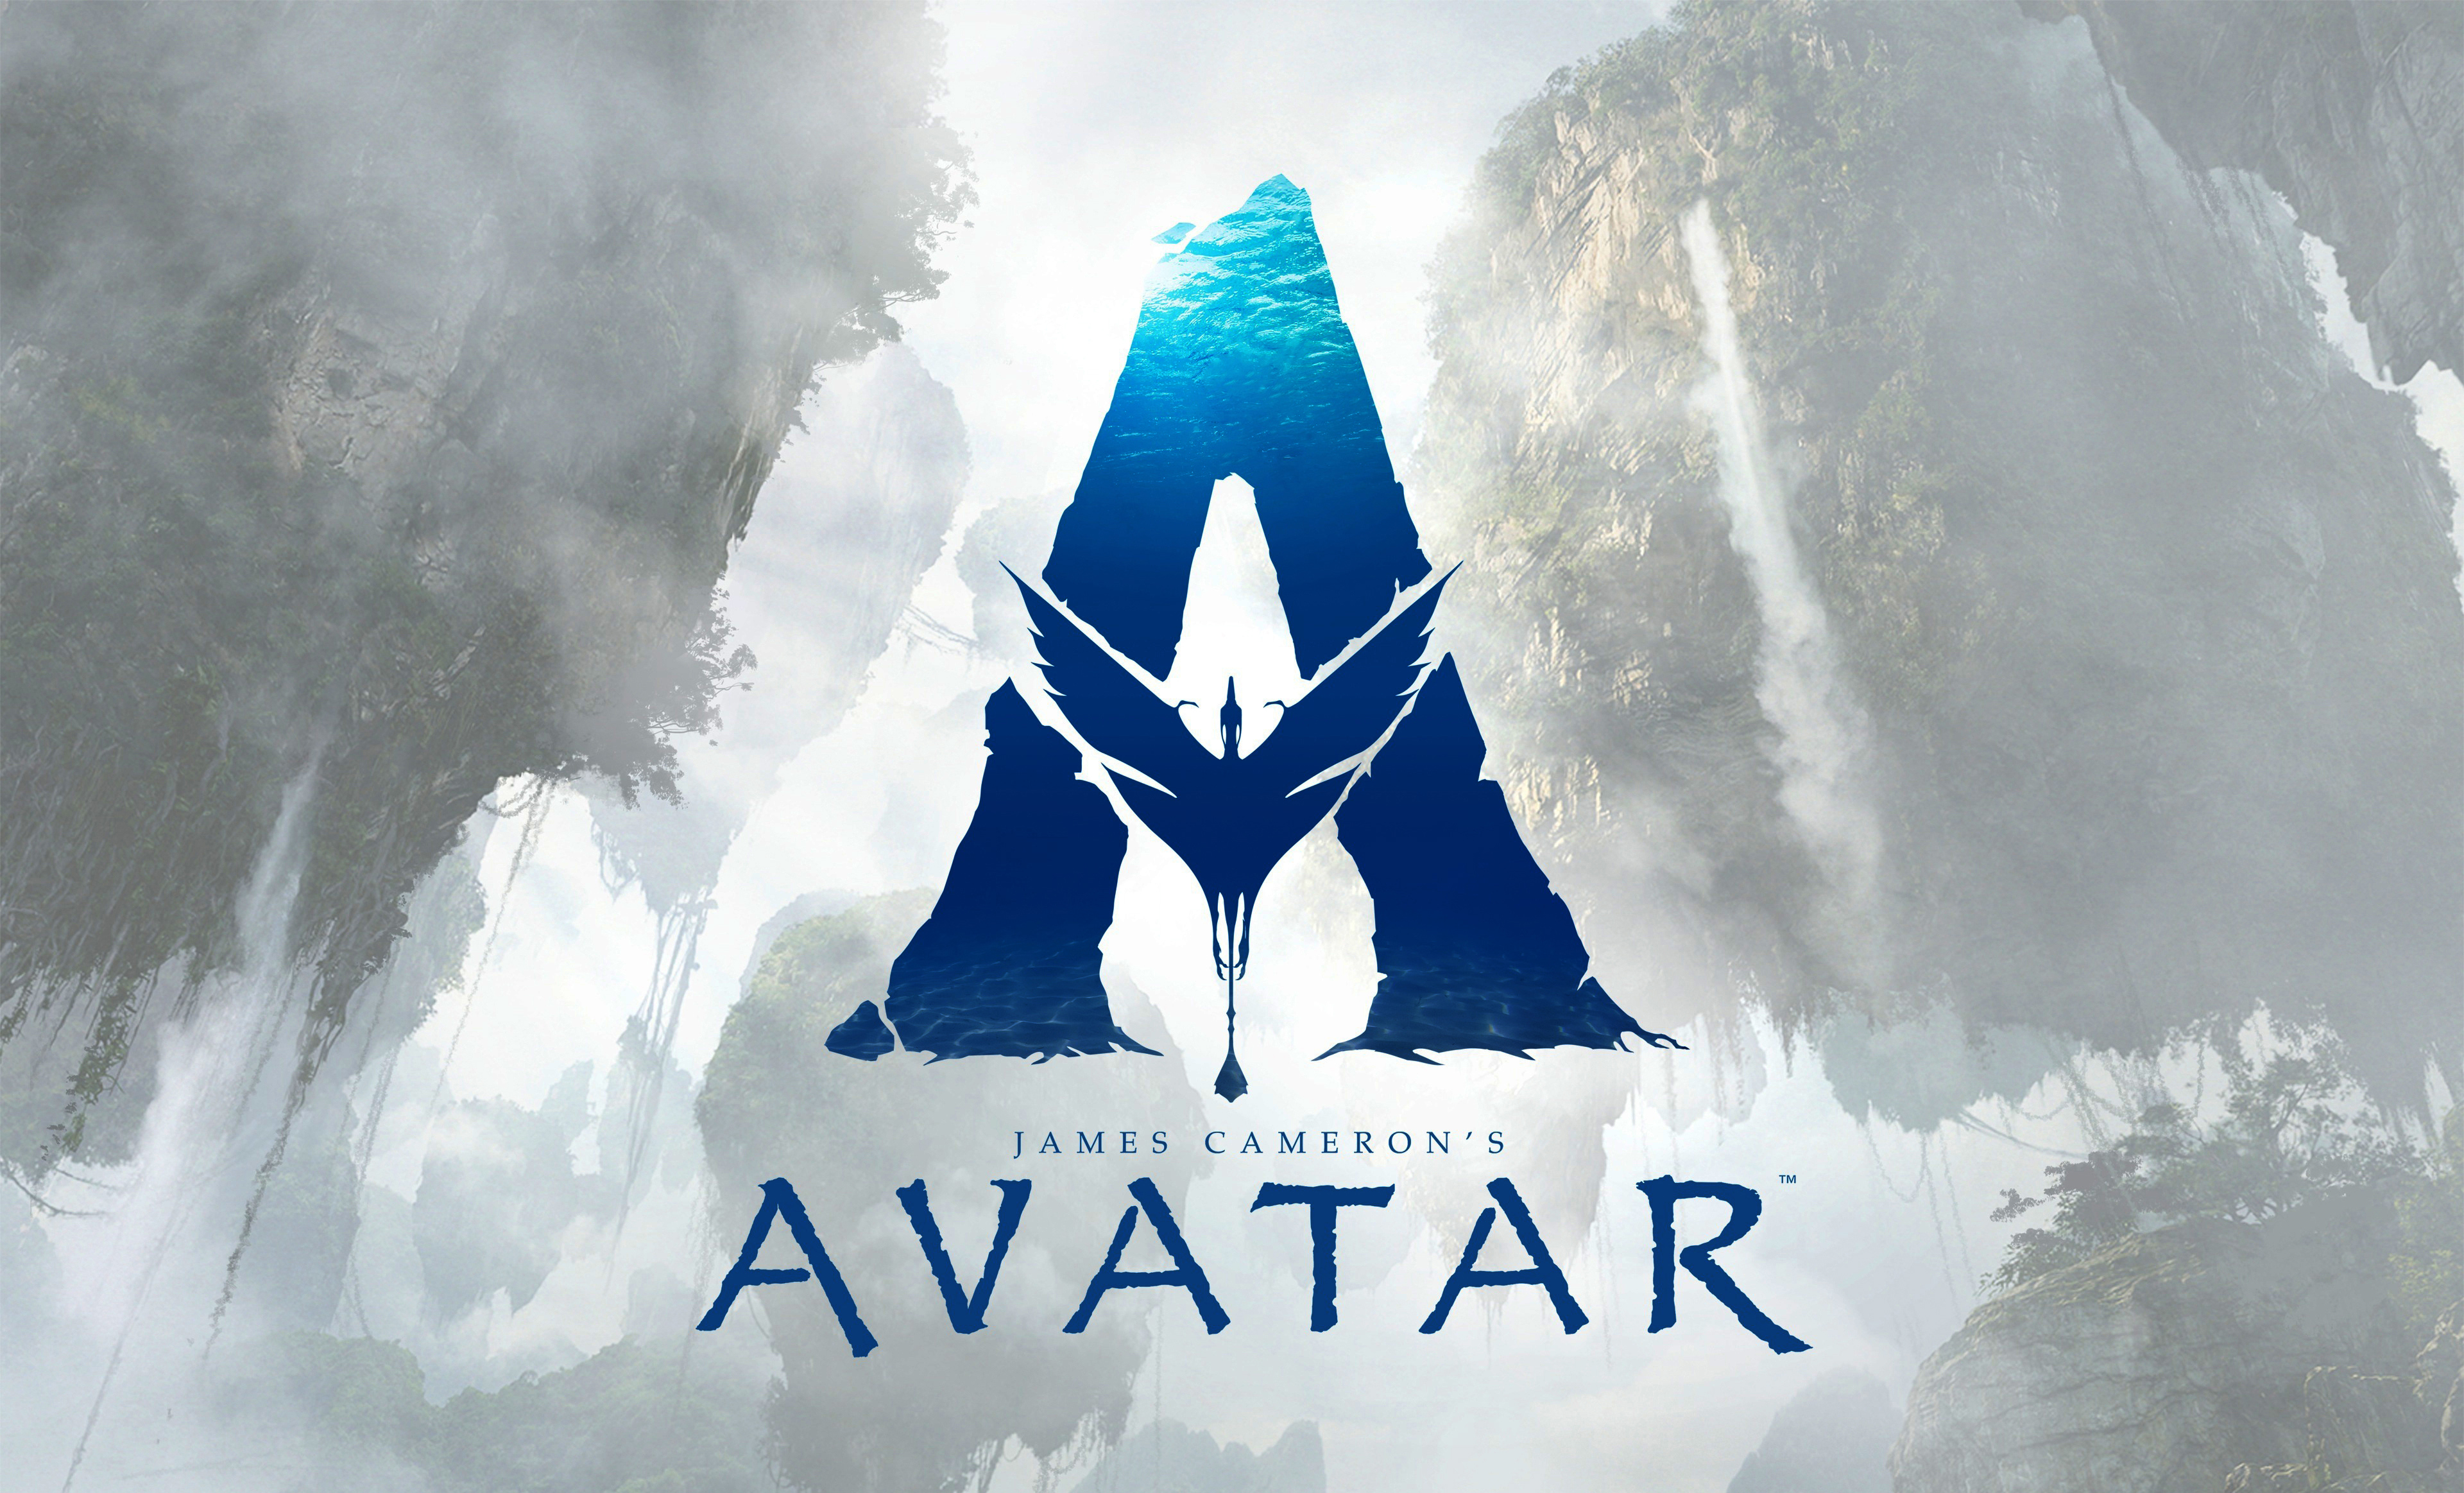 Avatar: The Way of Water 4k Ultra HD Wallpaper